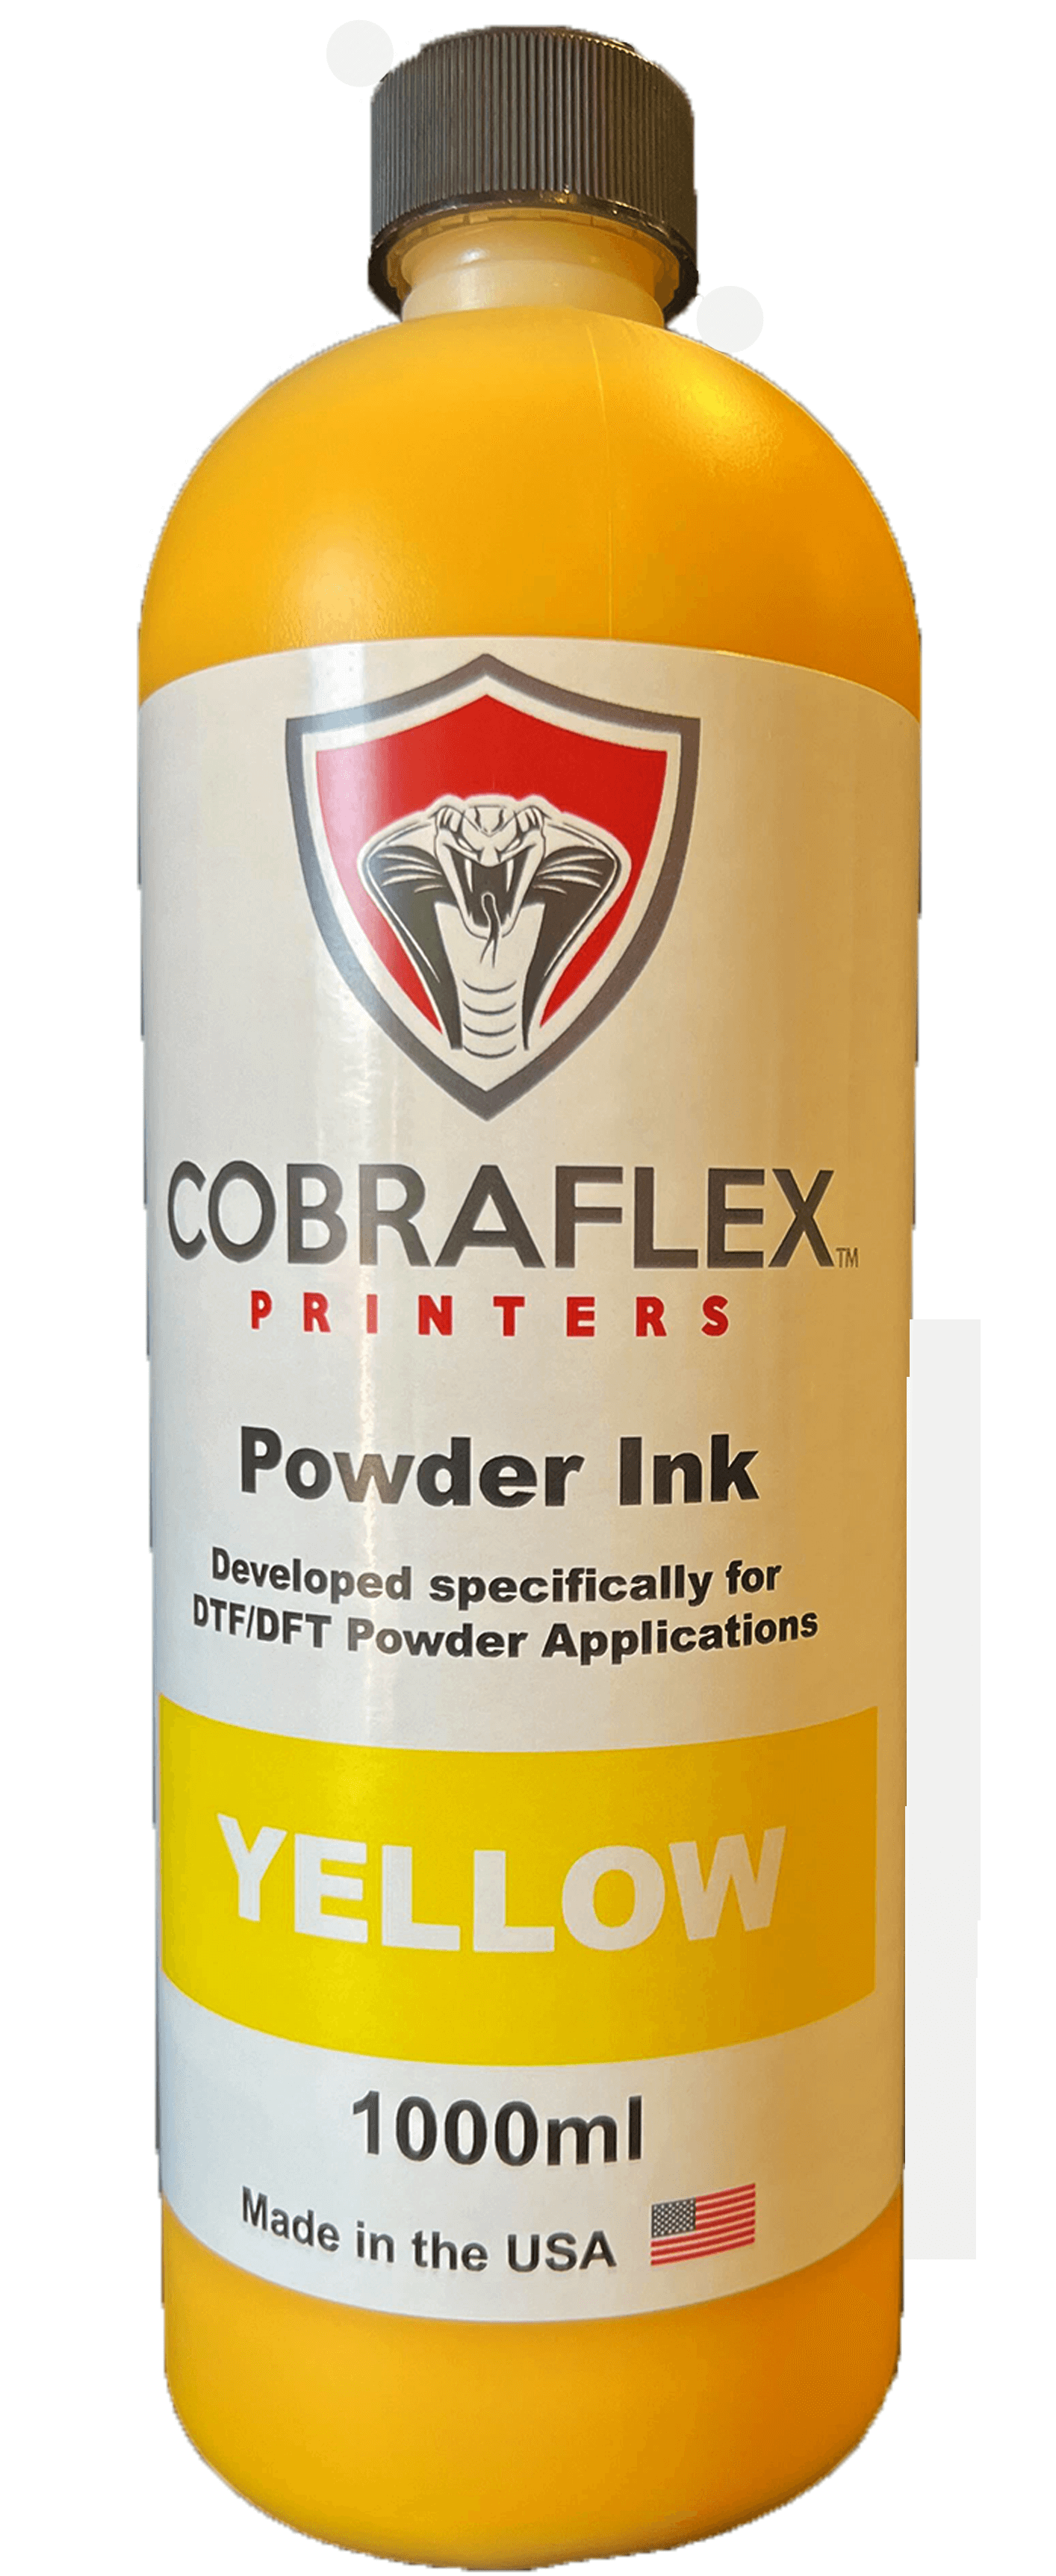 Cobraflex yellow powder ink